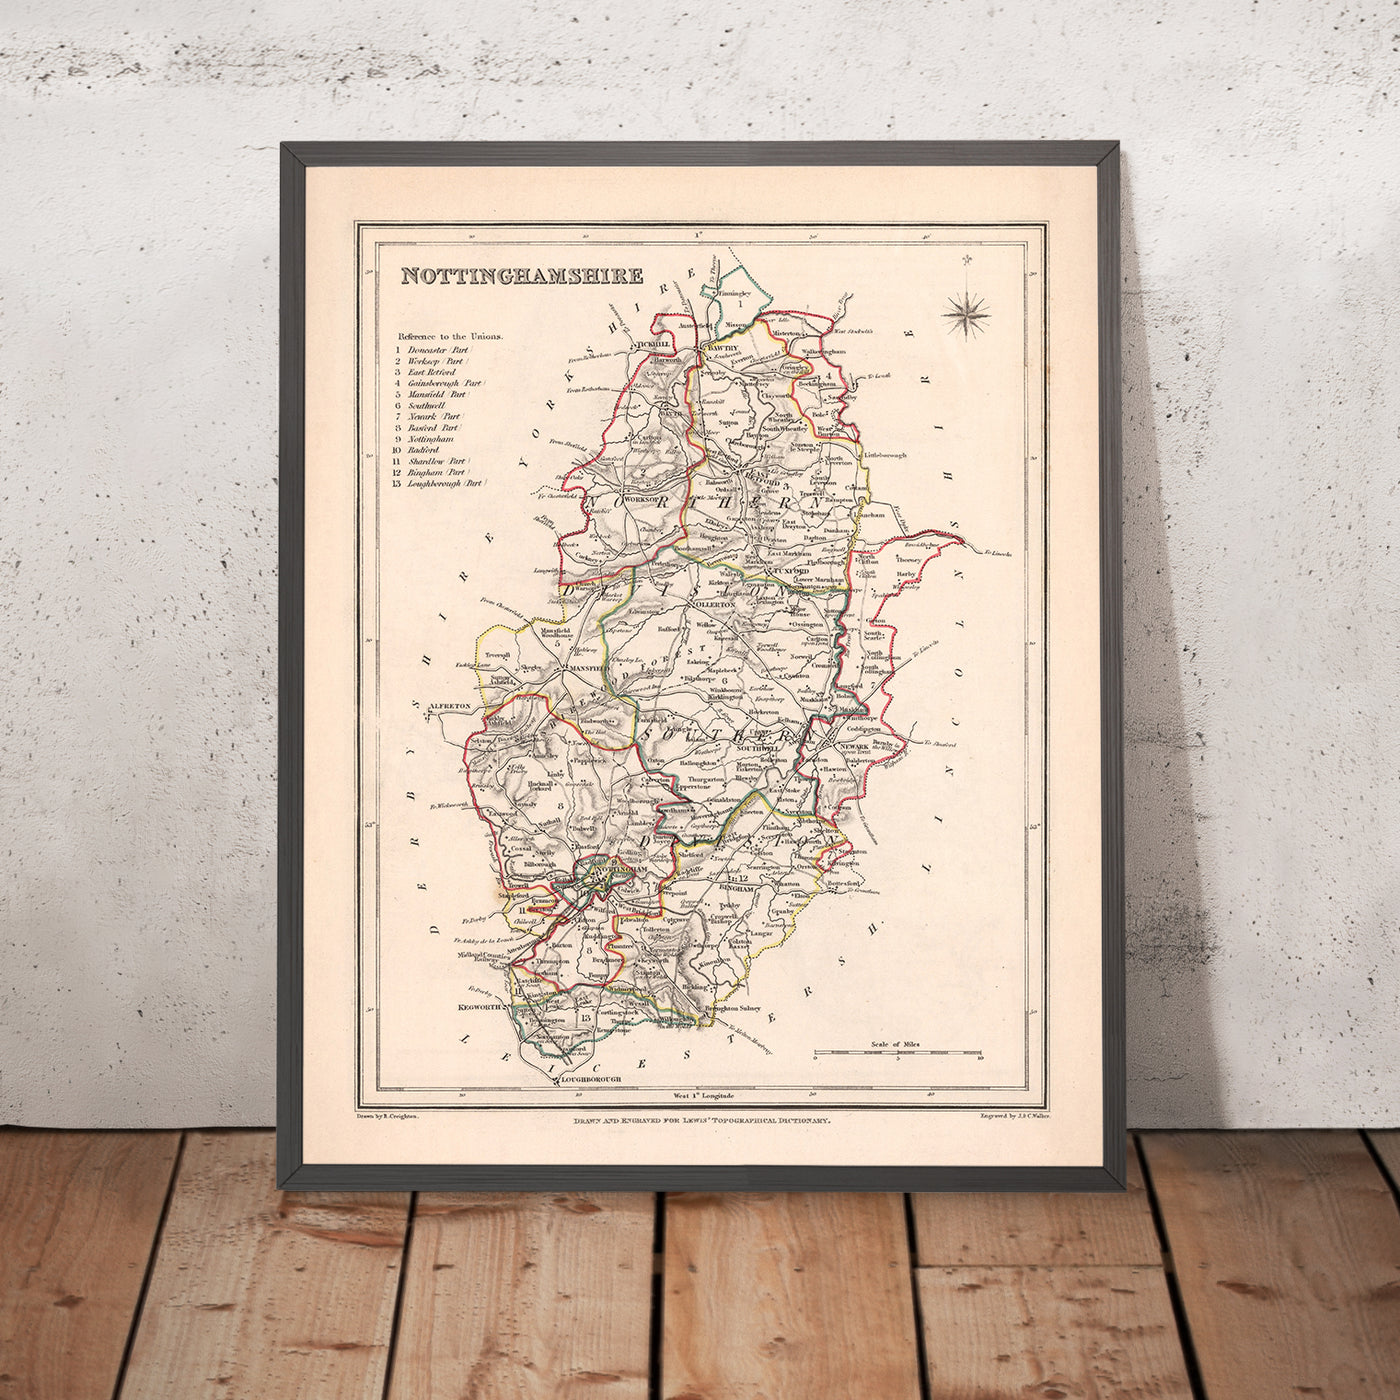 Old Map of Nottinghamshire by Samuel Lewis, 1844: Nottingham, Mansfield, Worksop, Newark, Retford